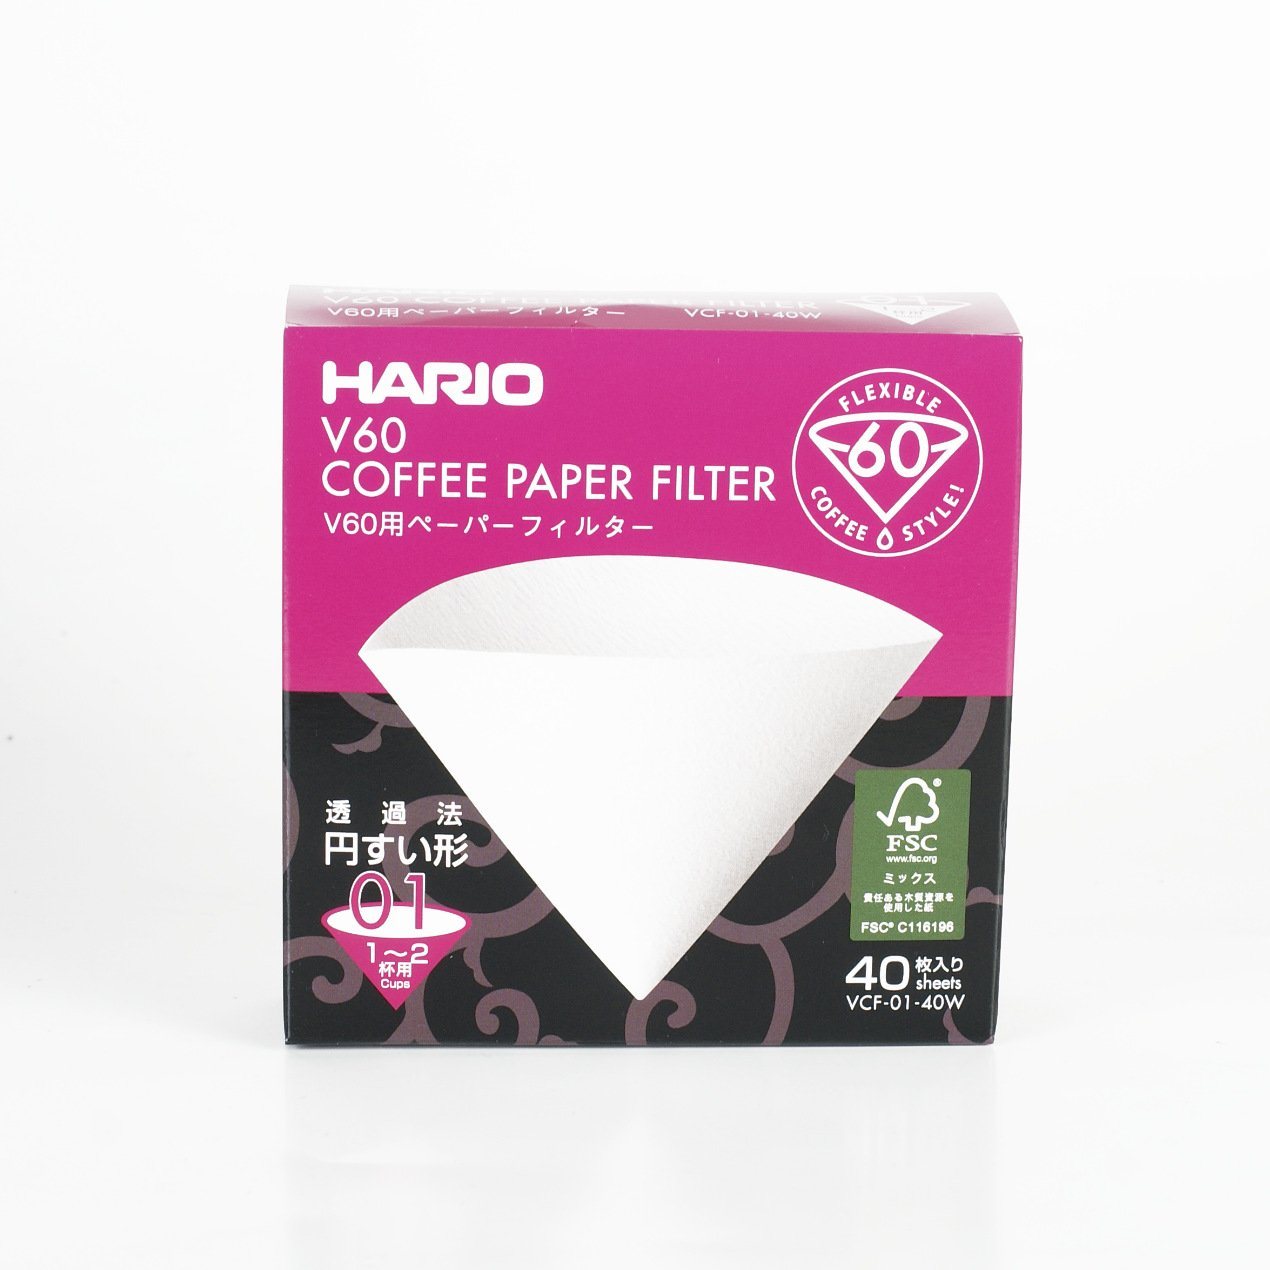 Hario V60 paper filter 01-40 pack Karajoz Coffee Company 